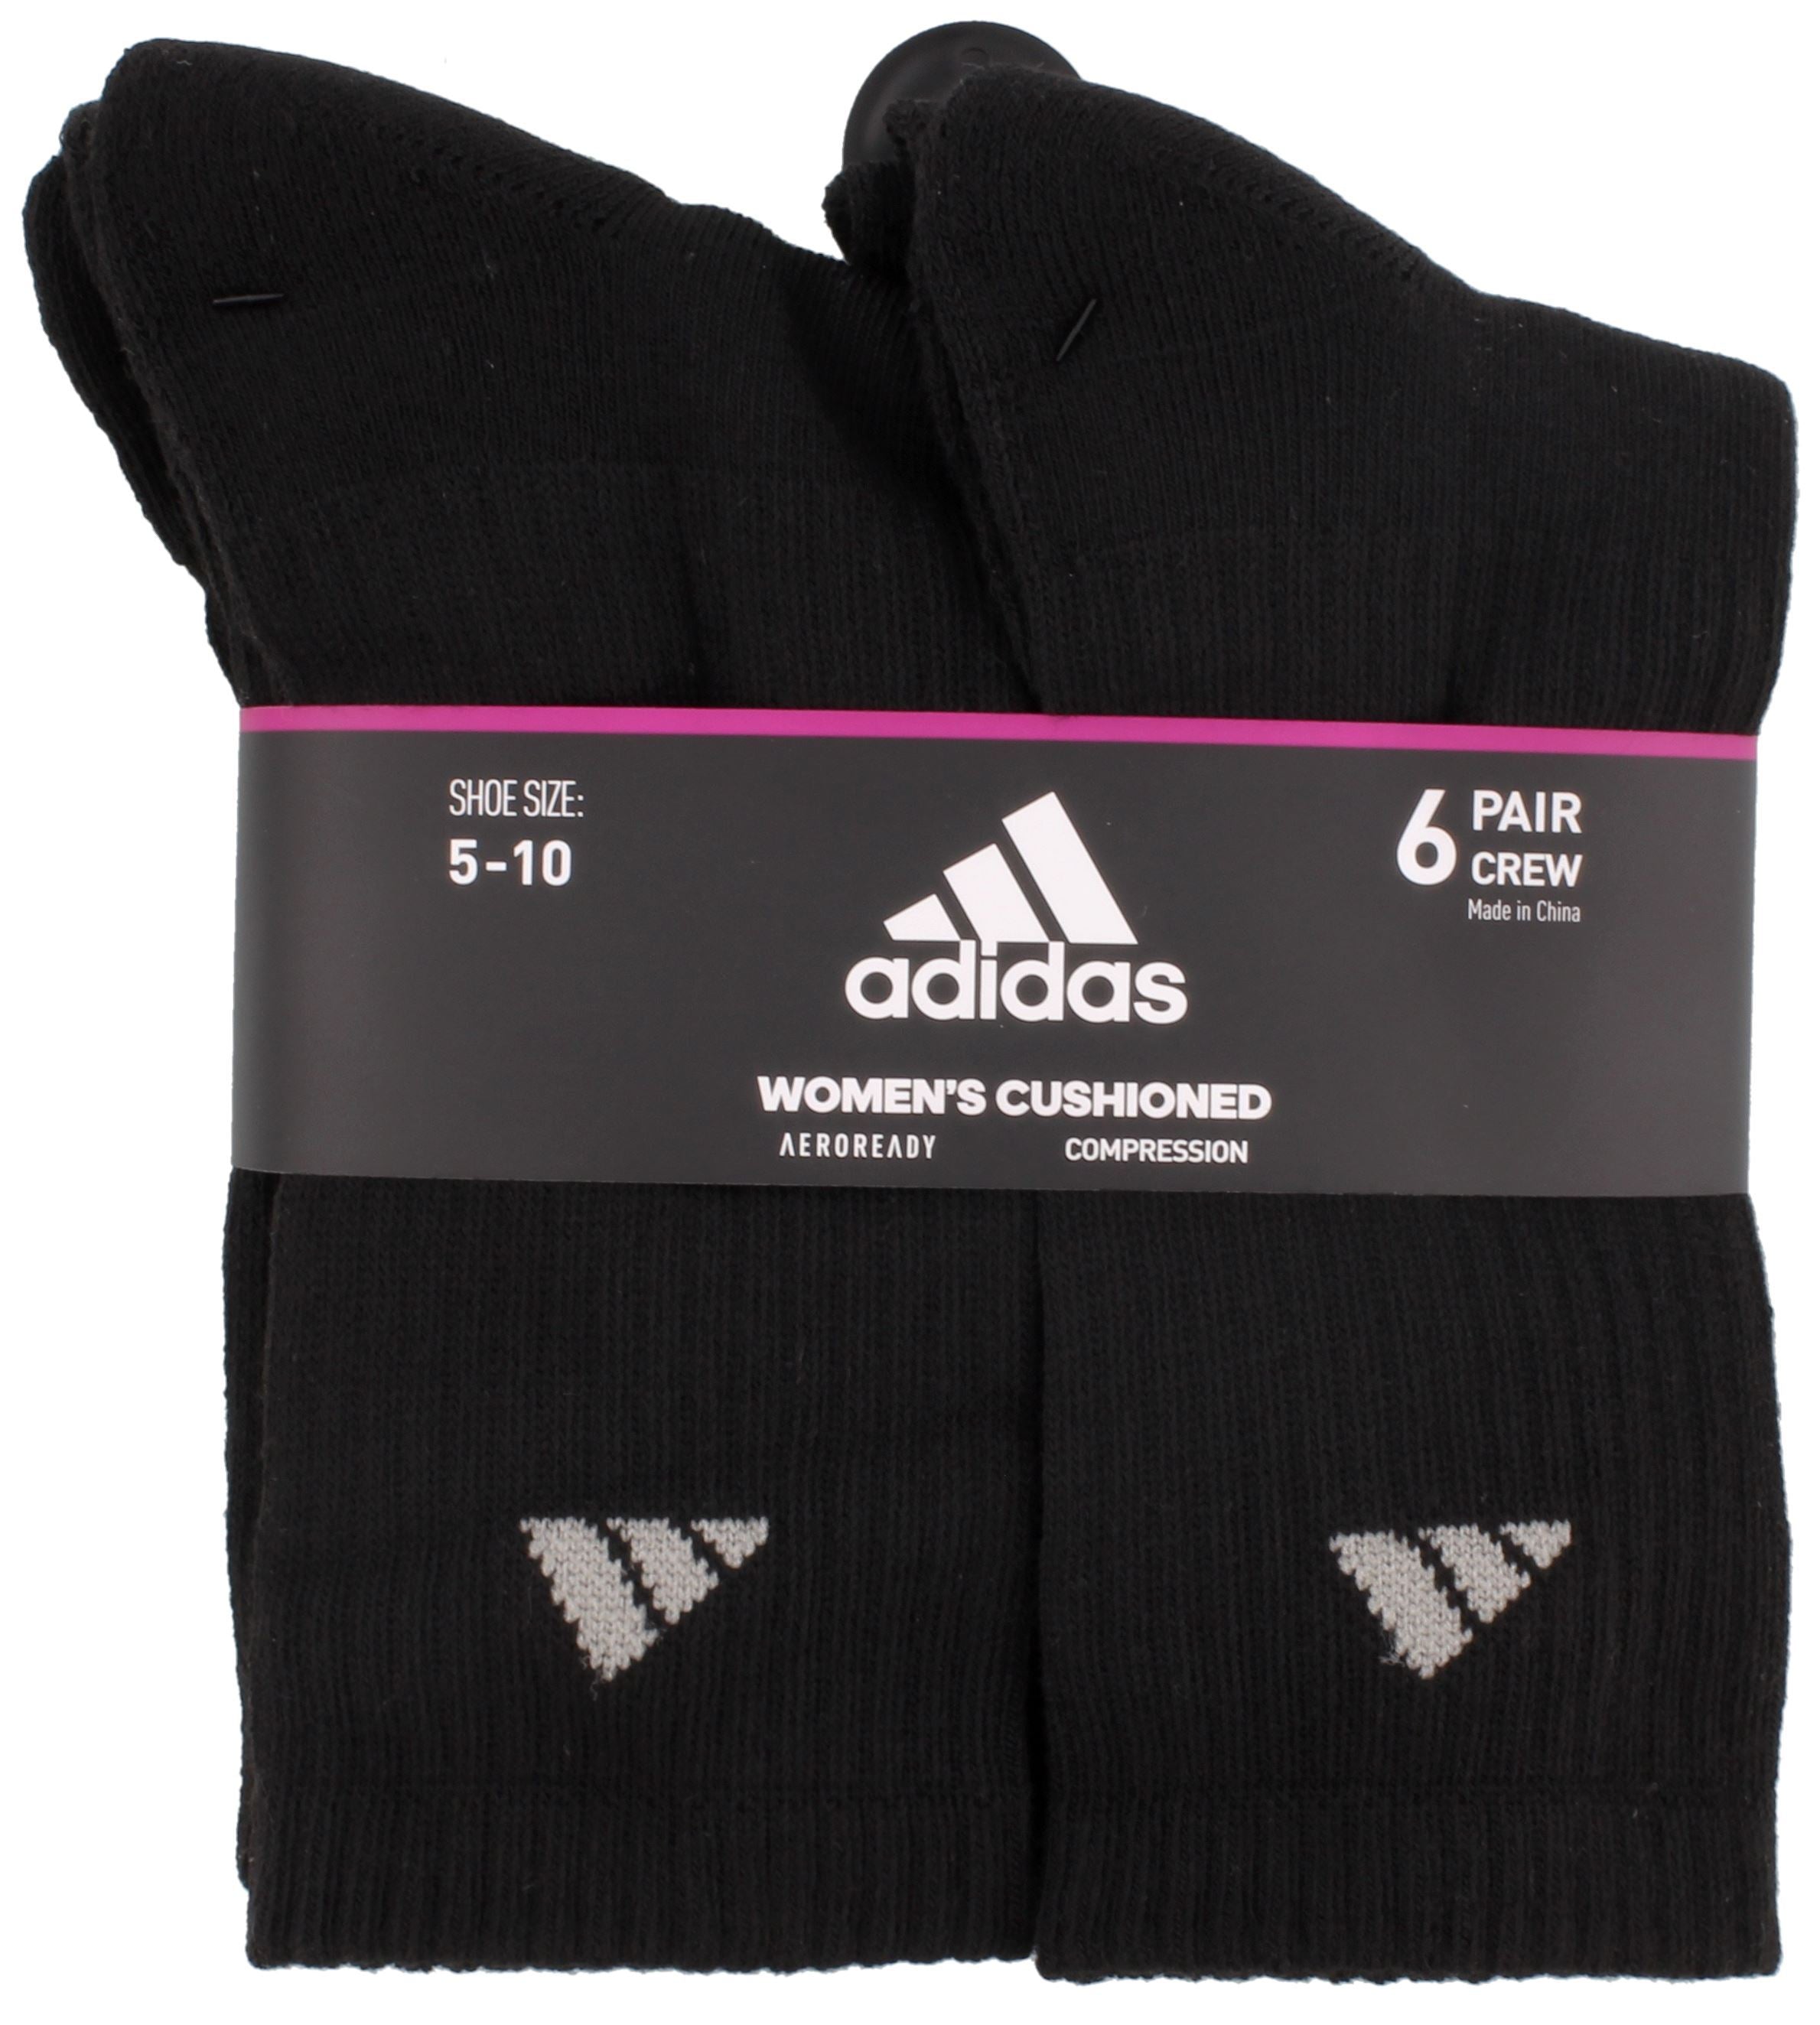 adidas Women's Athletic Crew Socks - 6 Pack | Goal Kick Soccer